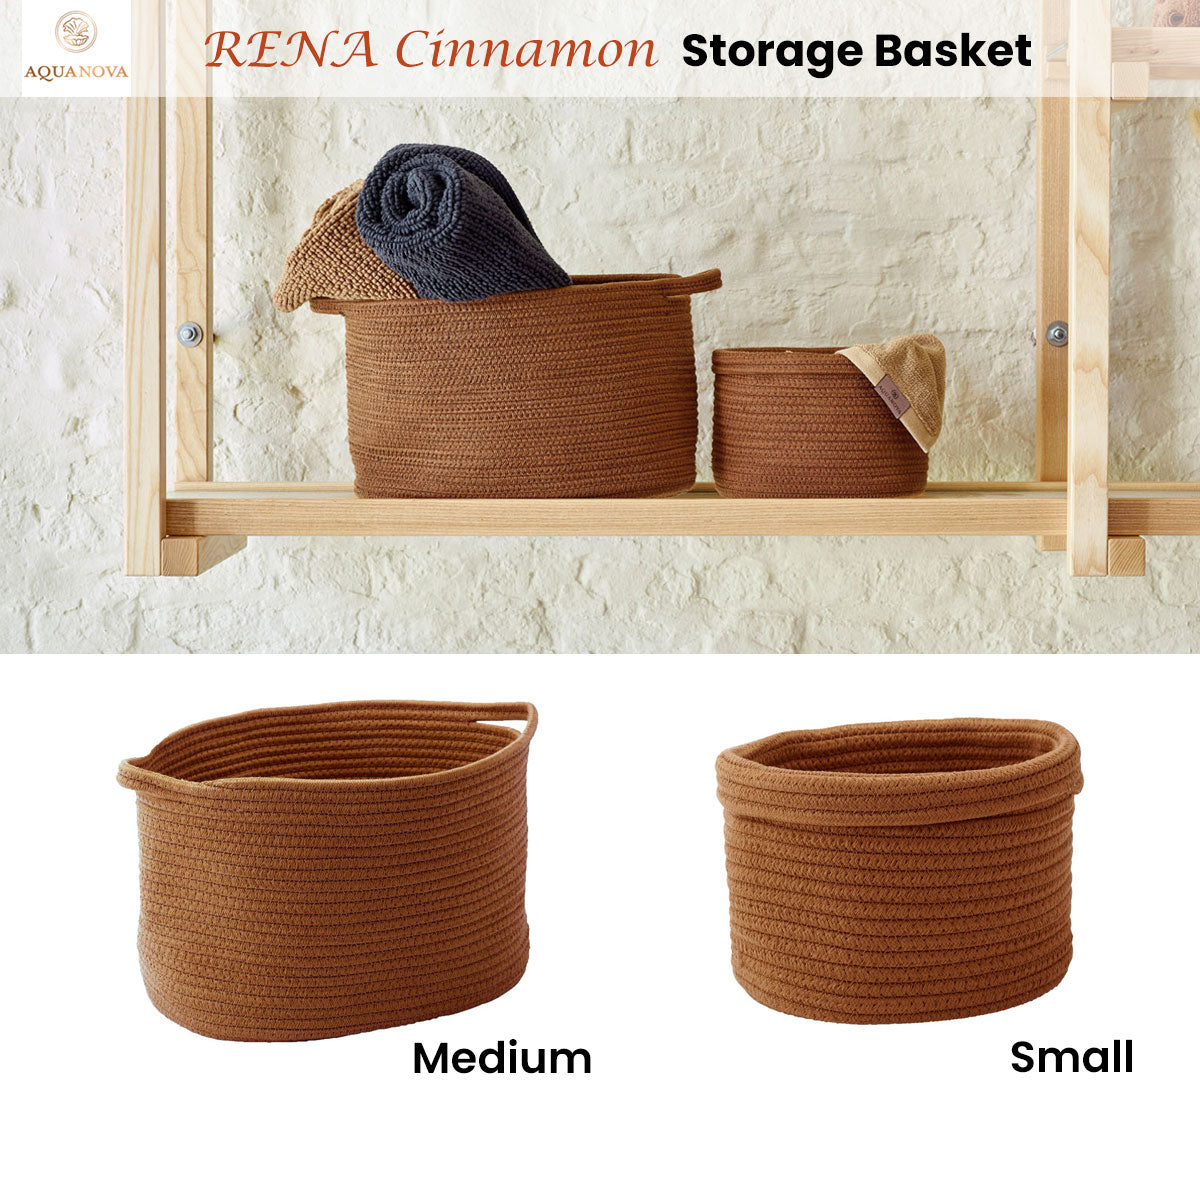 Aquanova RENA Cinnamon Storage Basket Small